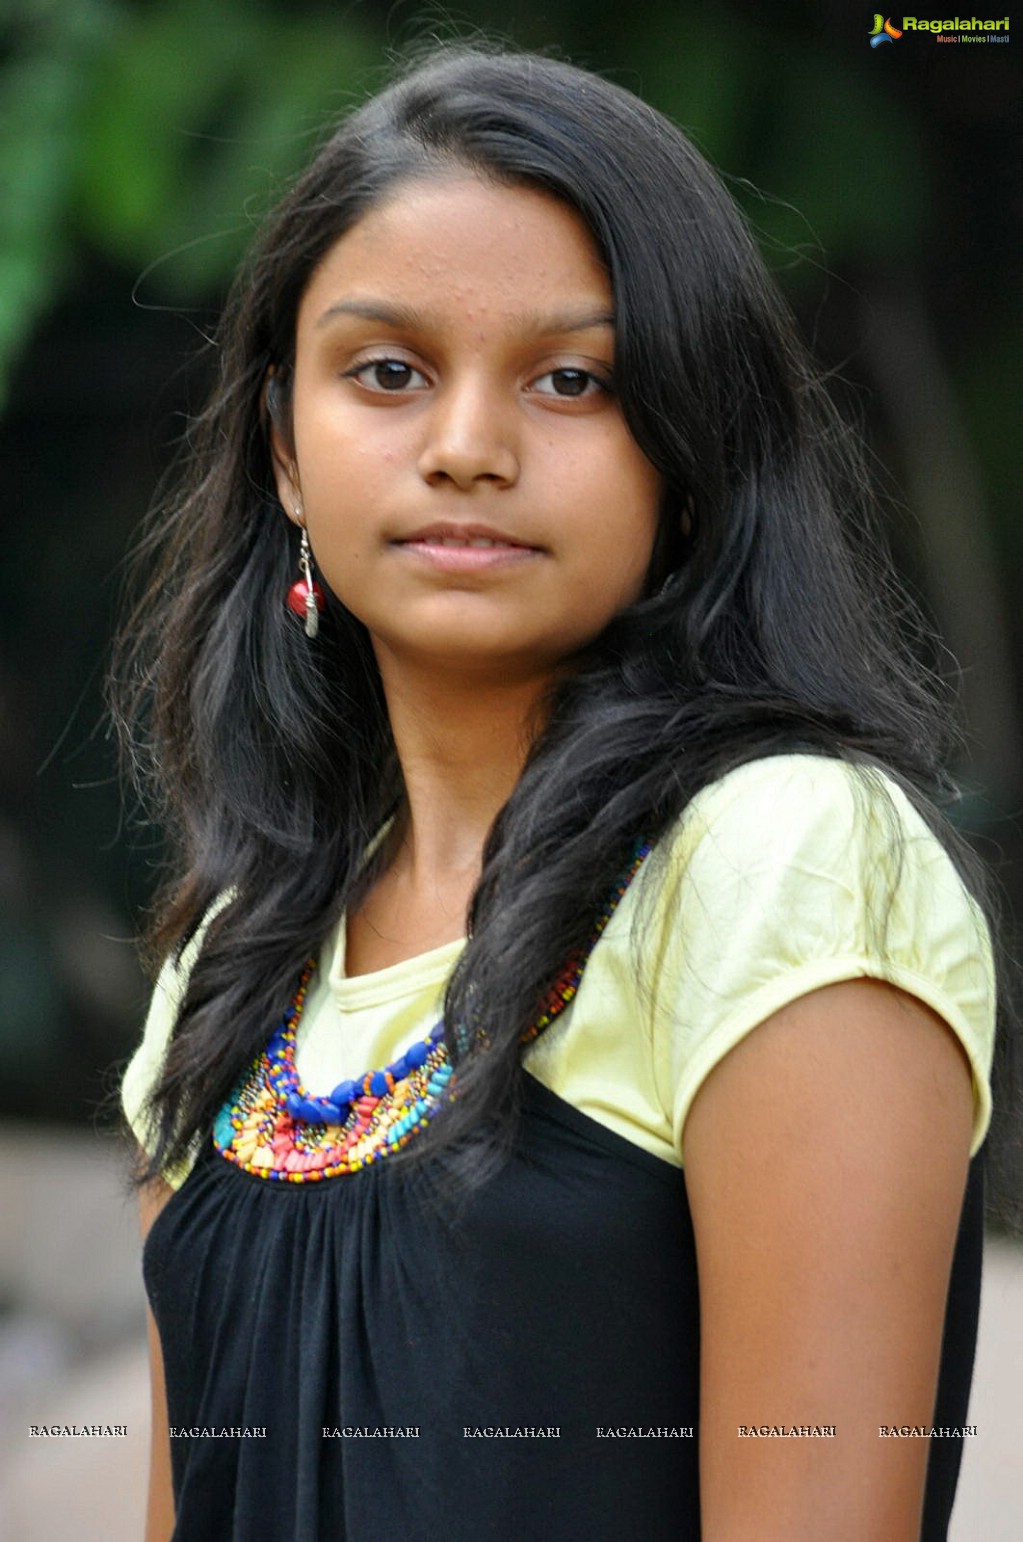 Indian princess 2012 auditions